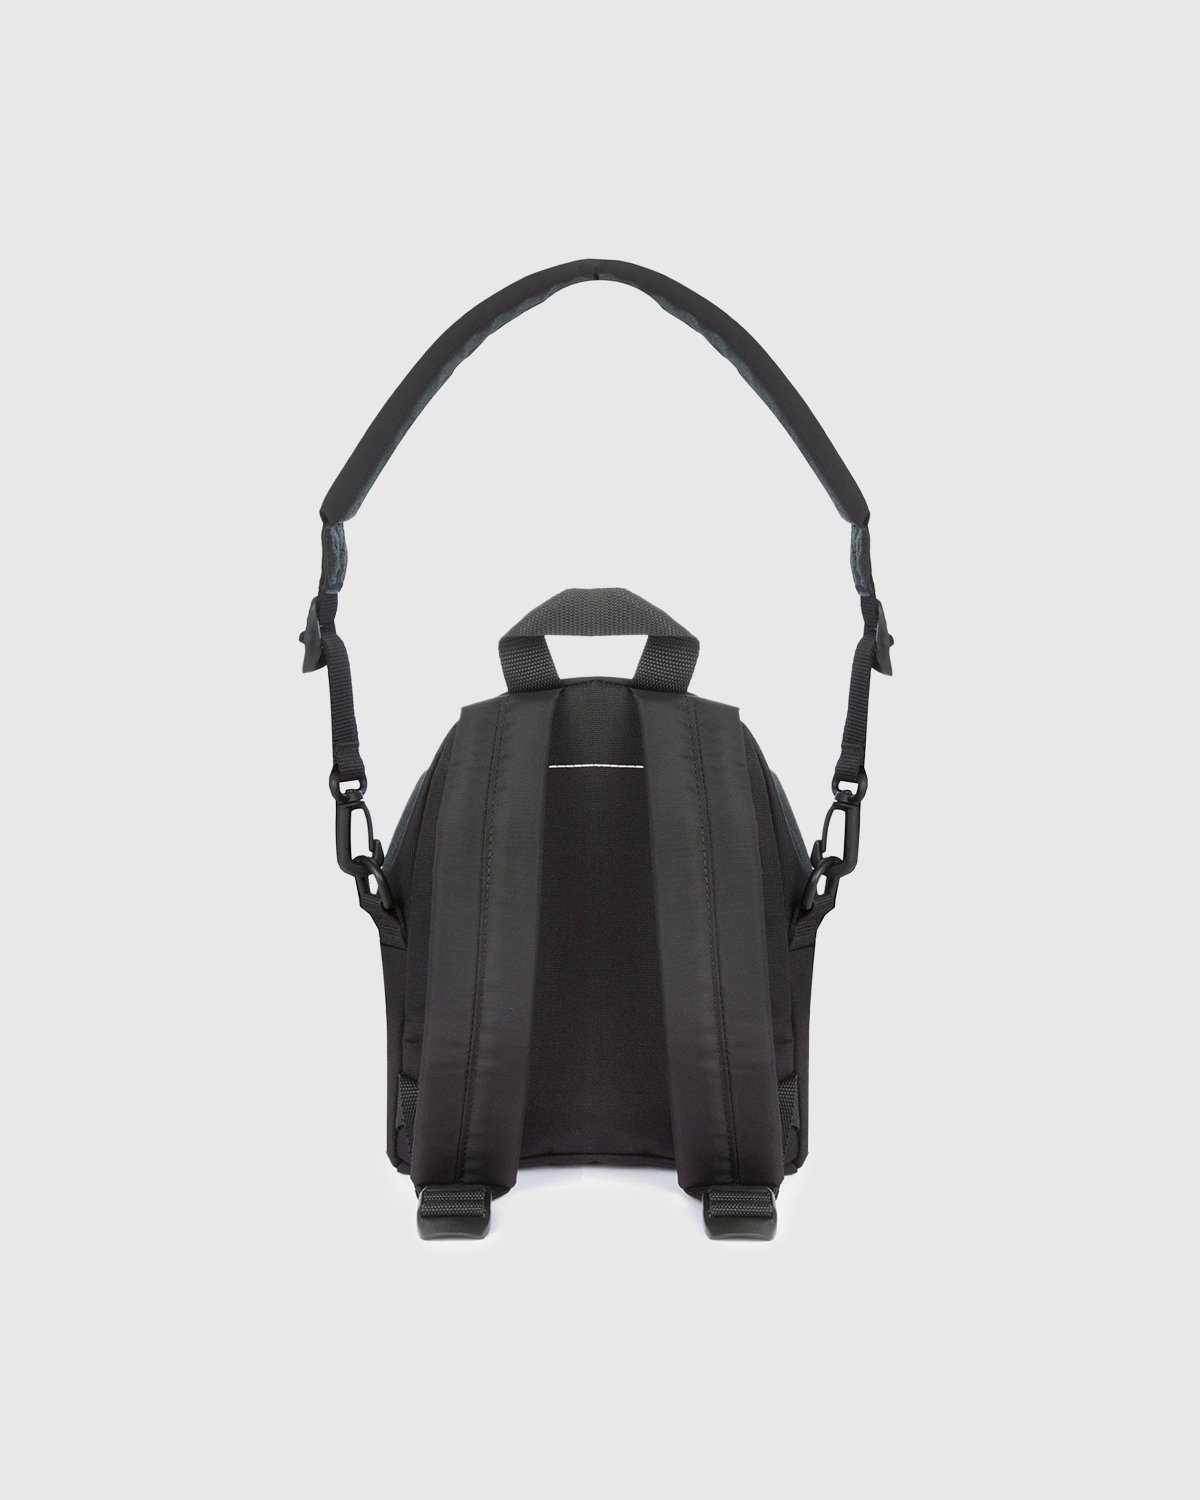 MM6 Maison Margiela x Eastpak - Shoulder Bag Black - Accessories - Black - Image 3